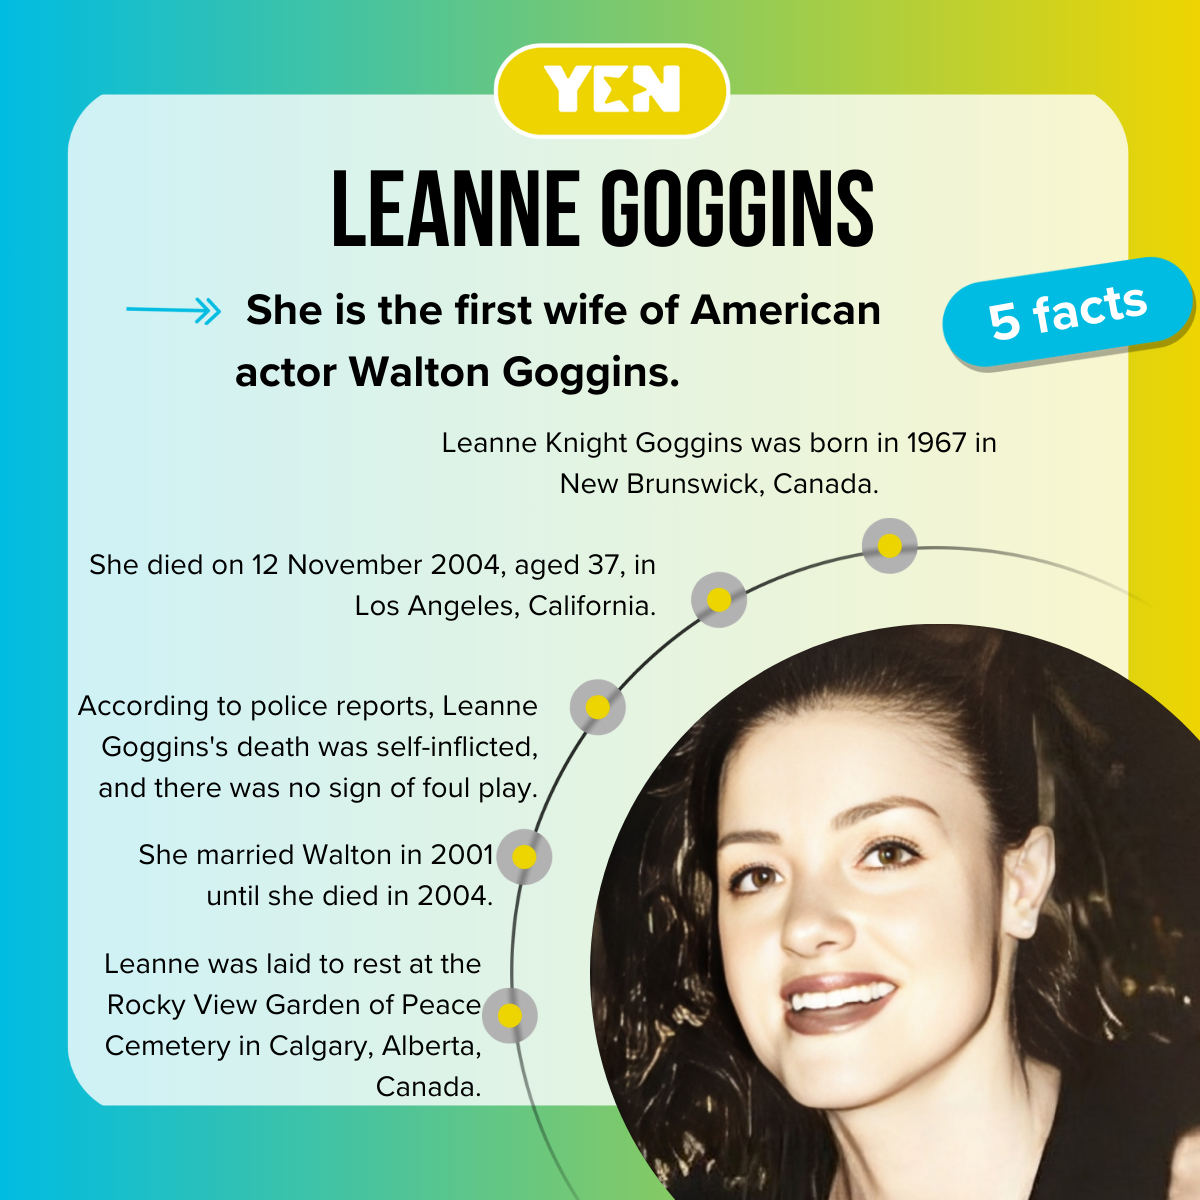 Five facts about Leanne Goggins